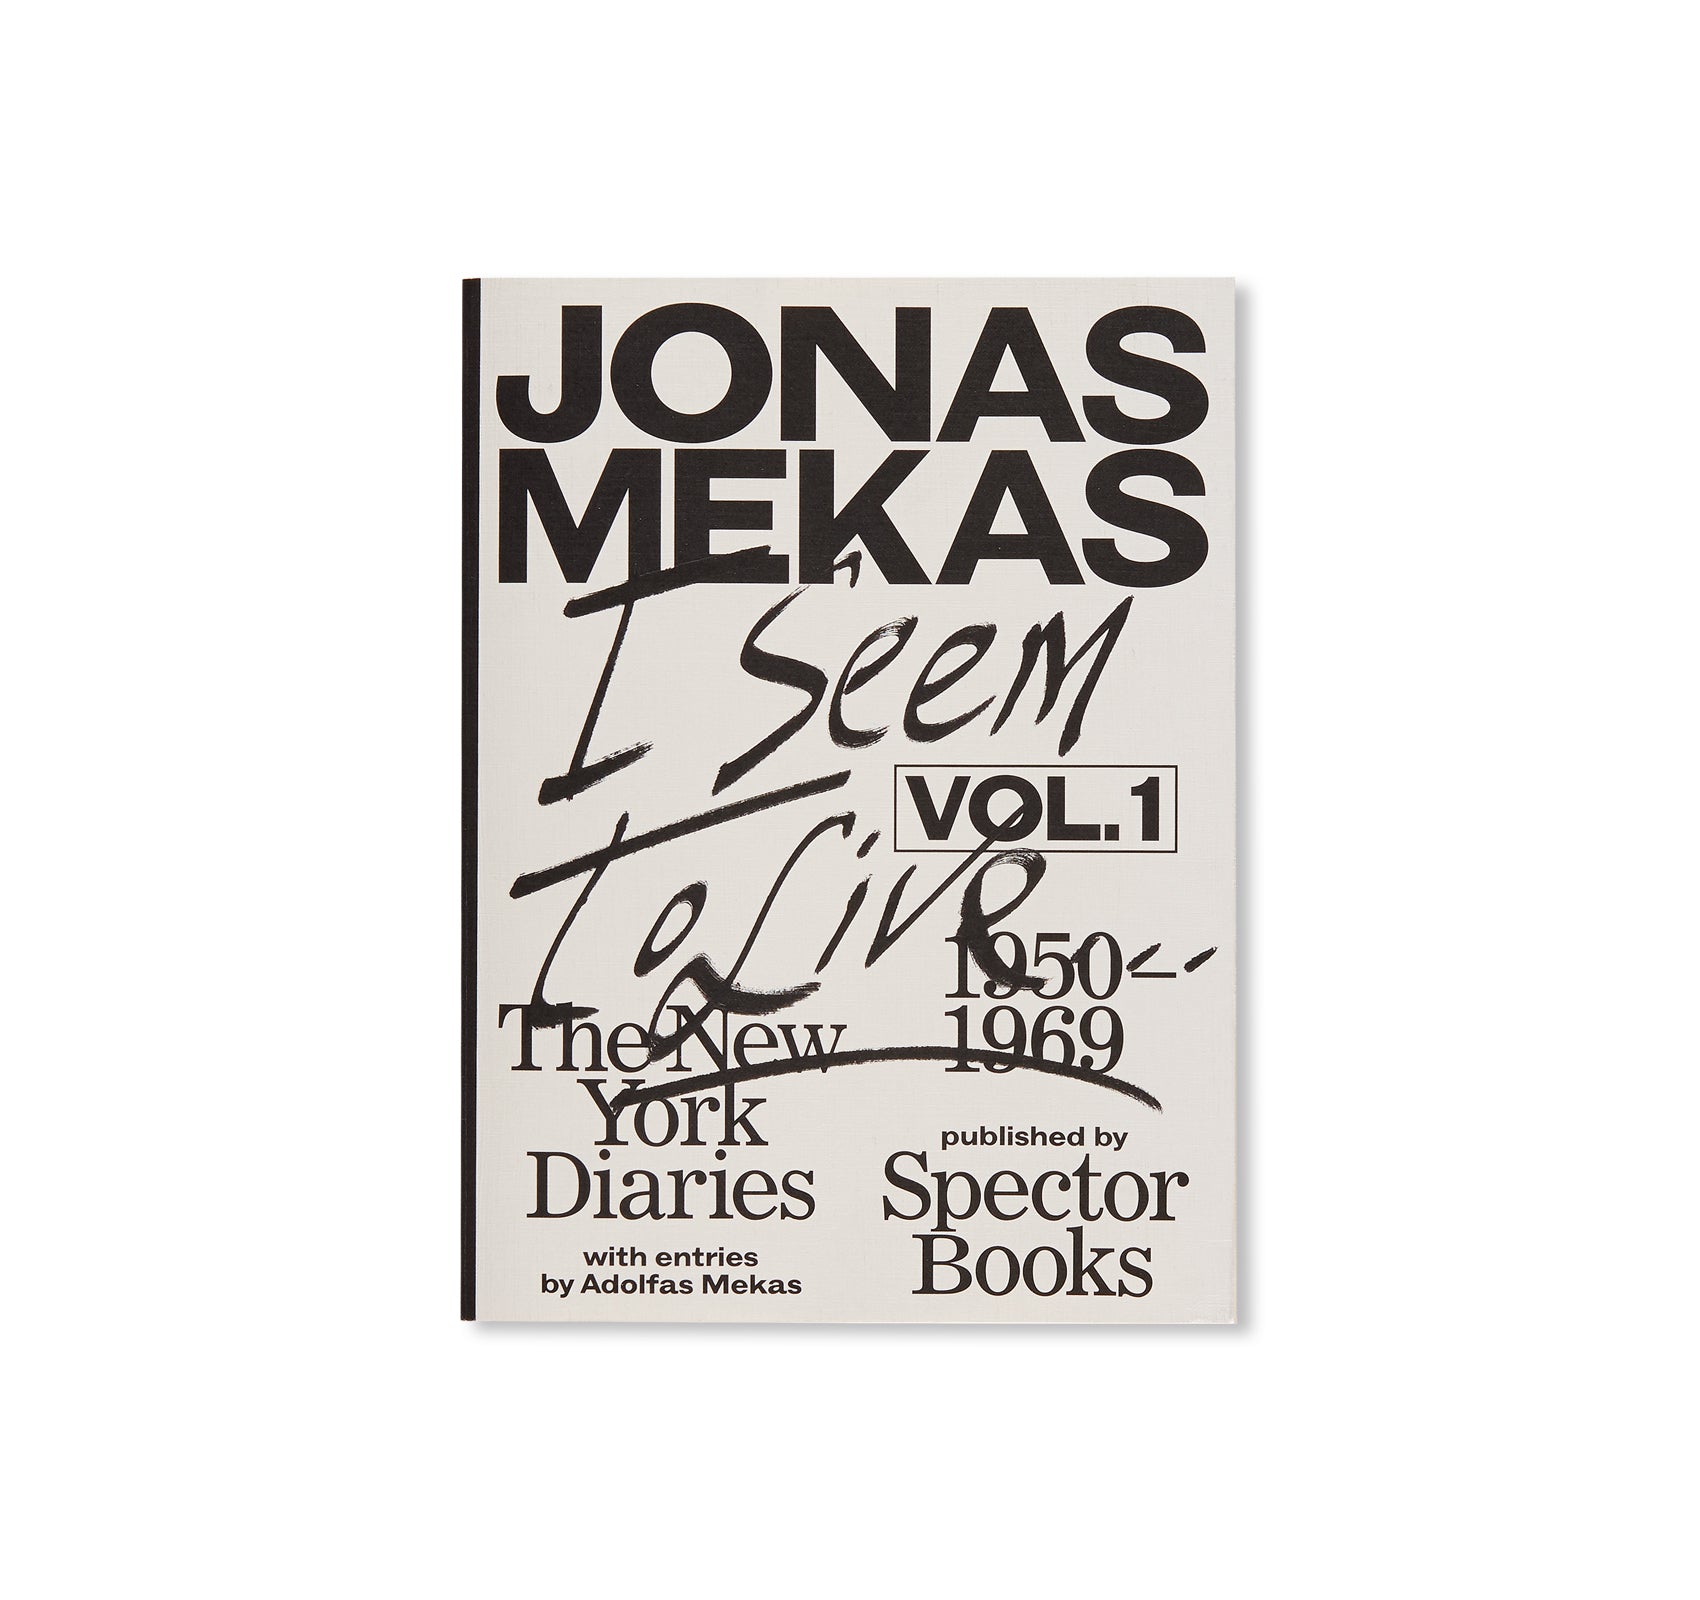 I SEEM TO LIVE - The New York Diaries. vol.1, 1950-1969 by Jonas Mekas